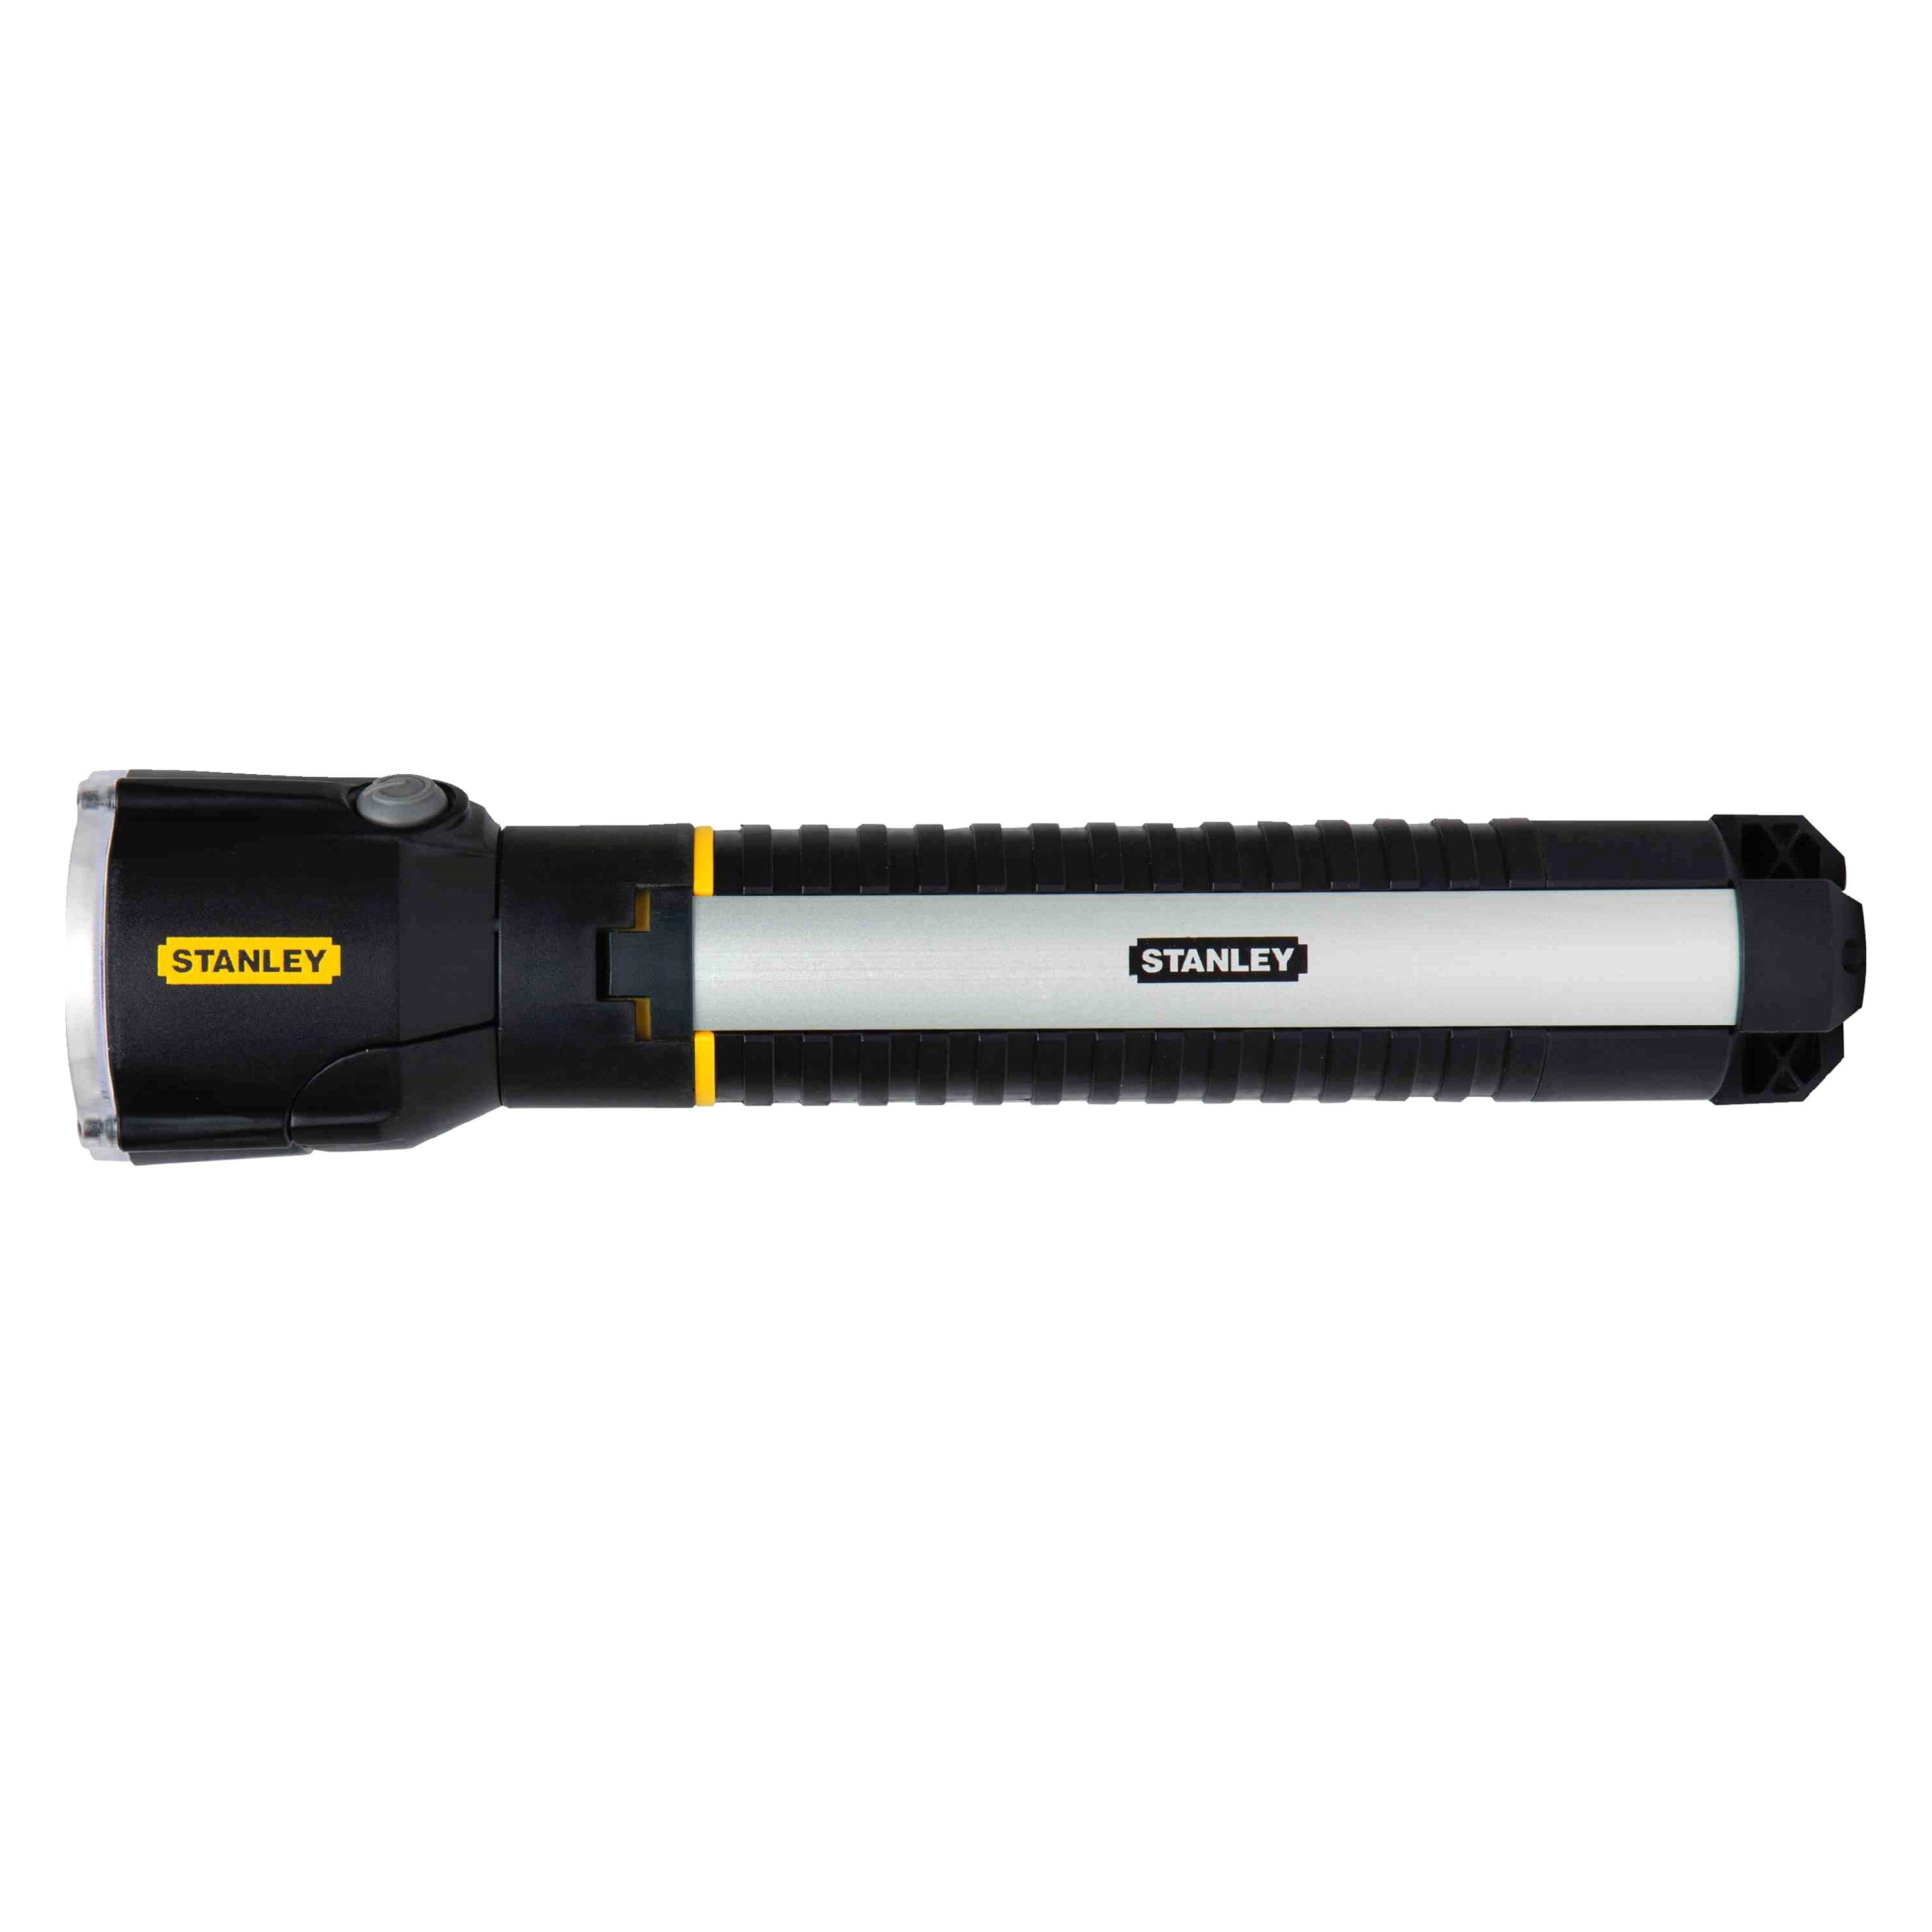 STANLEY Mini Tripod LED Flashlight with keychain - Black/Silver Finish  95-113X